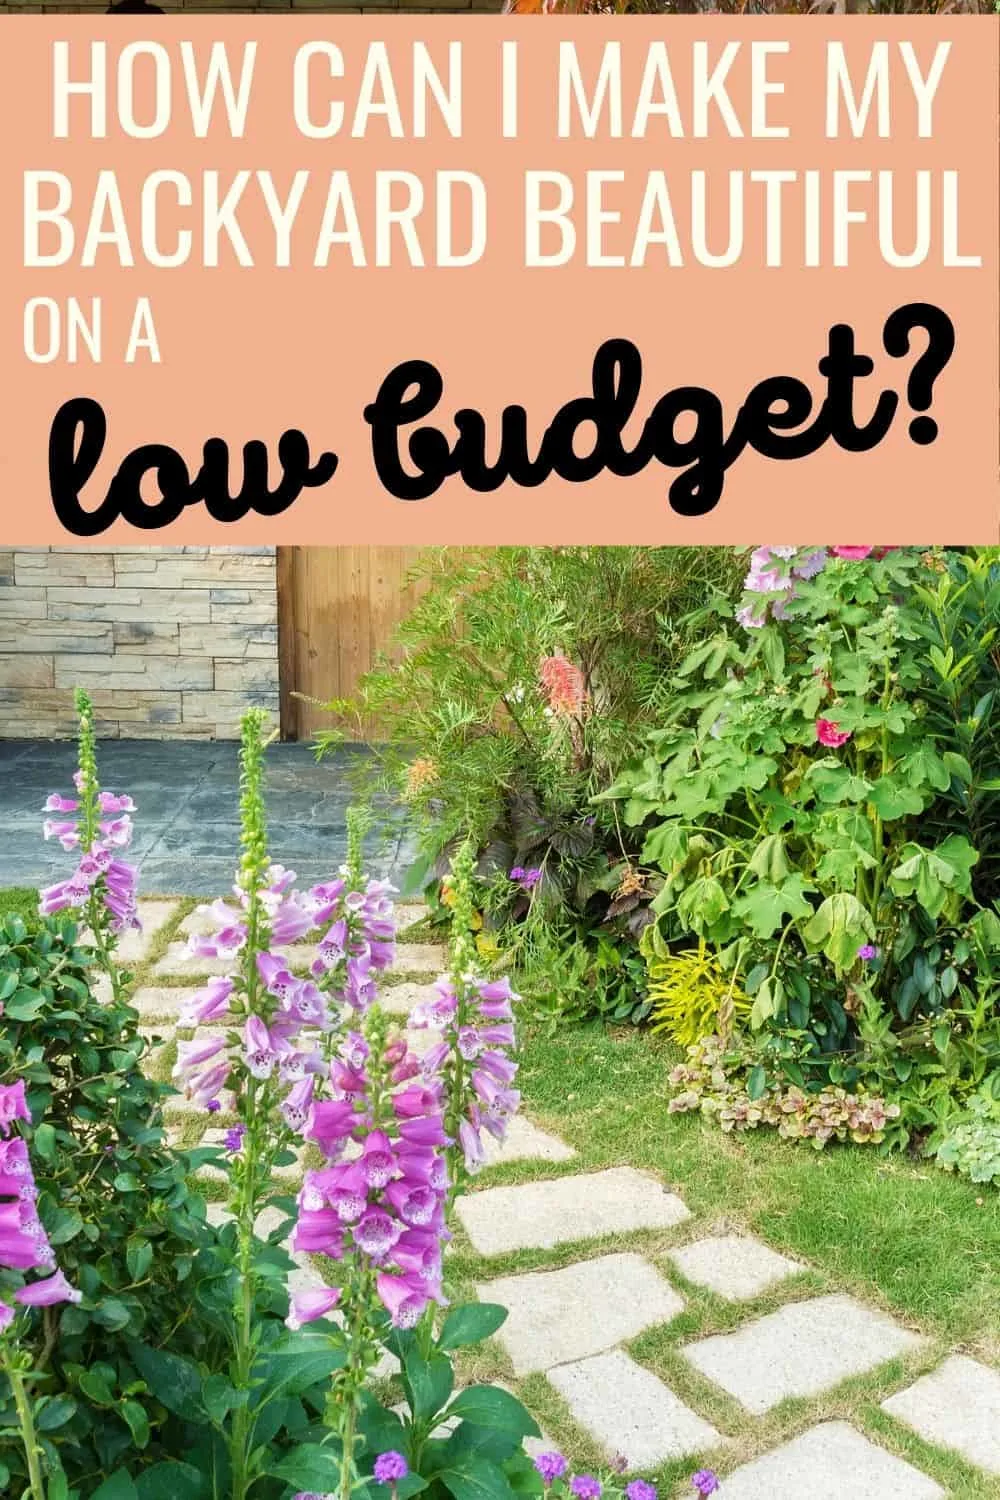 How can I make my backyard beautiful on a low budget